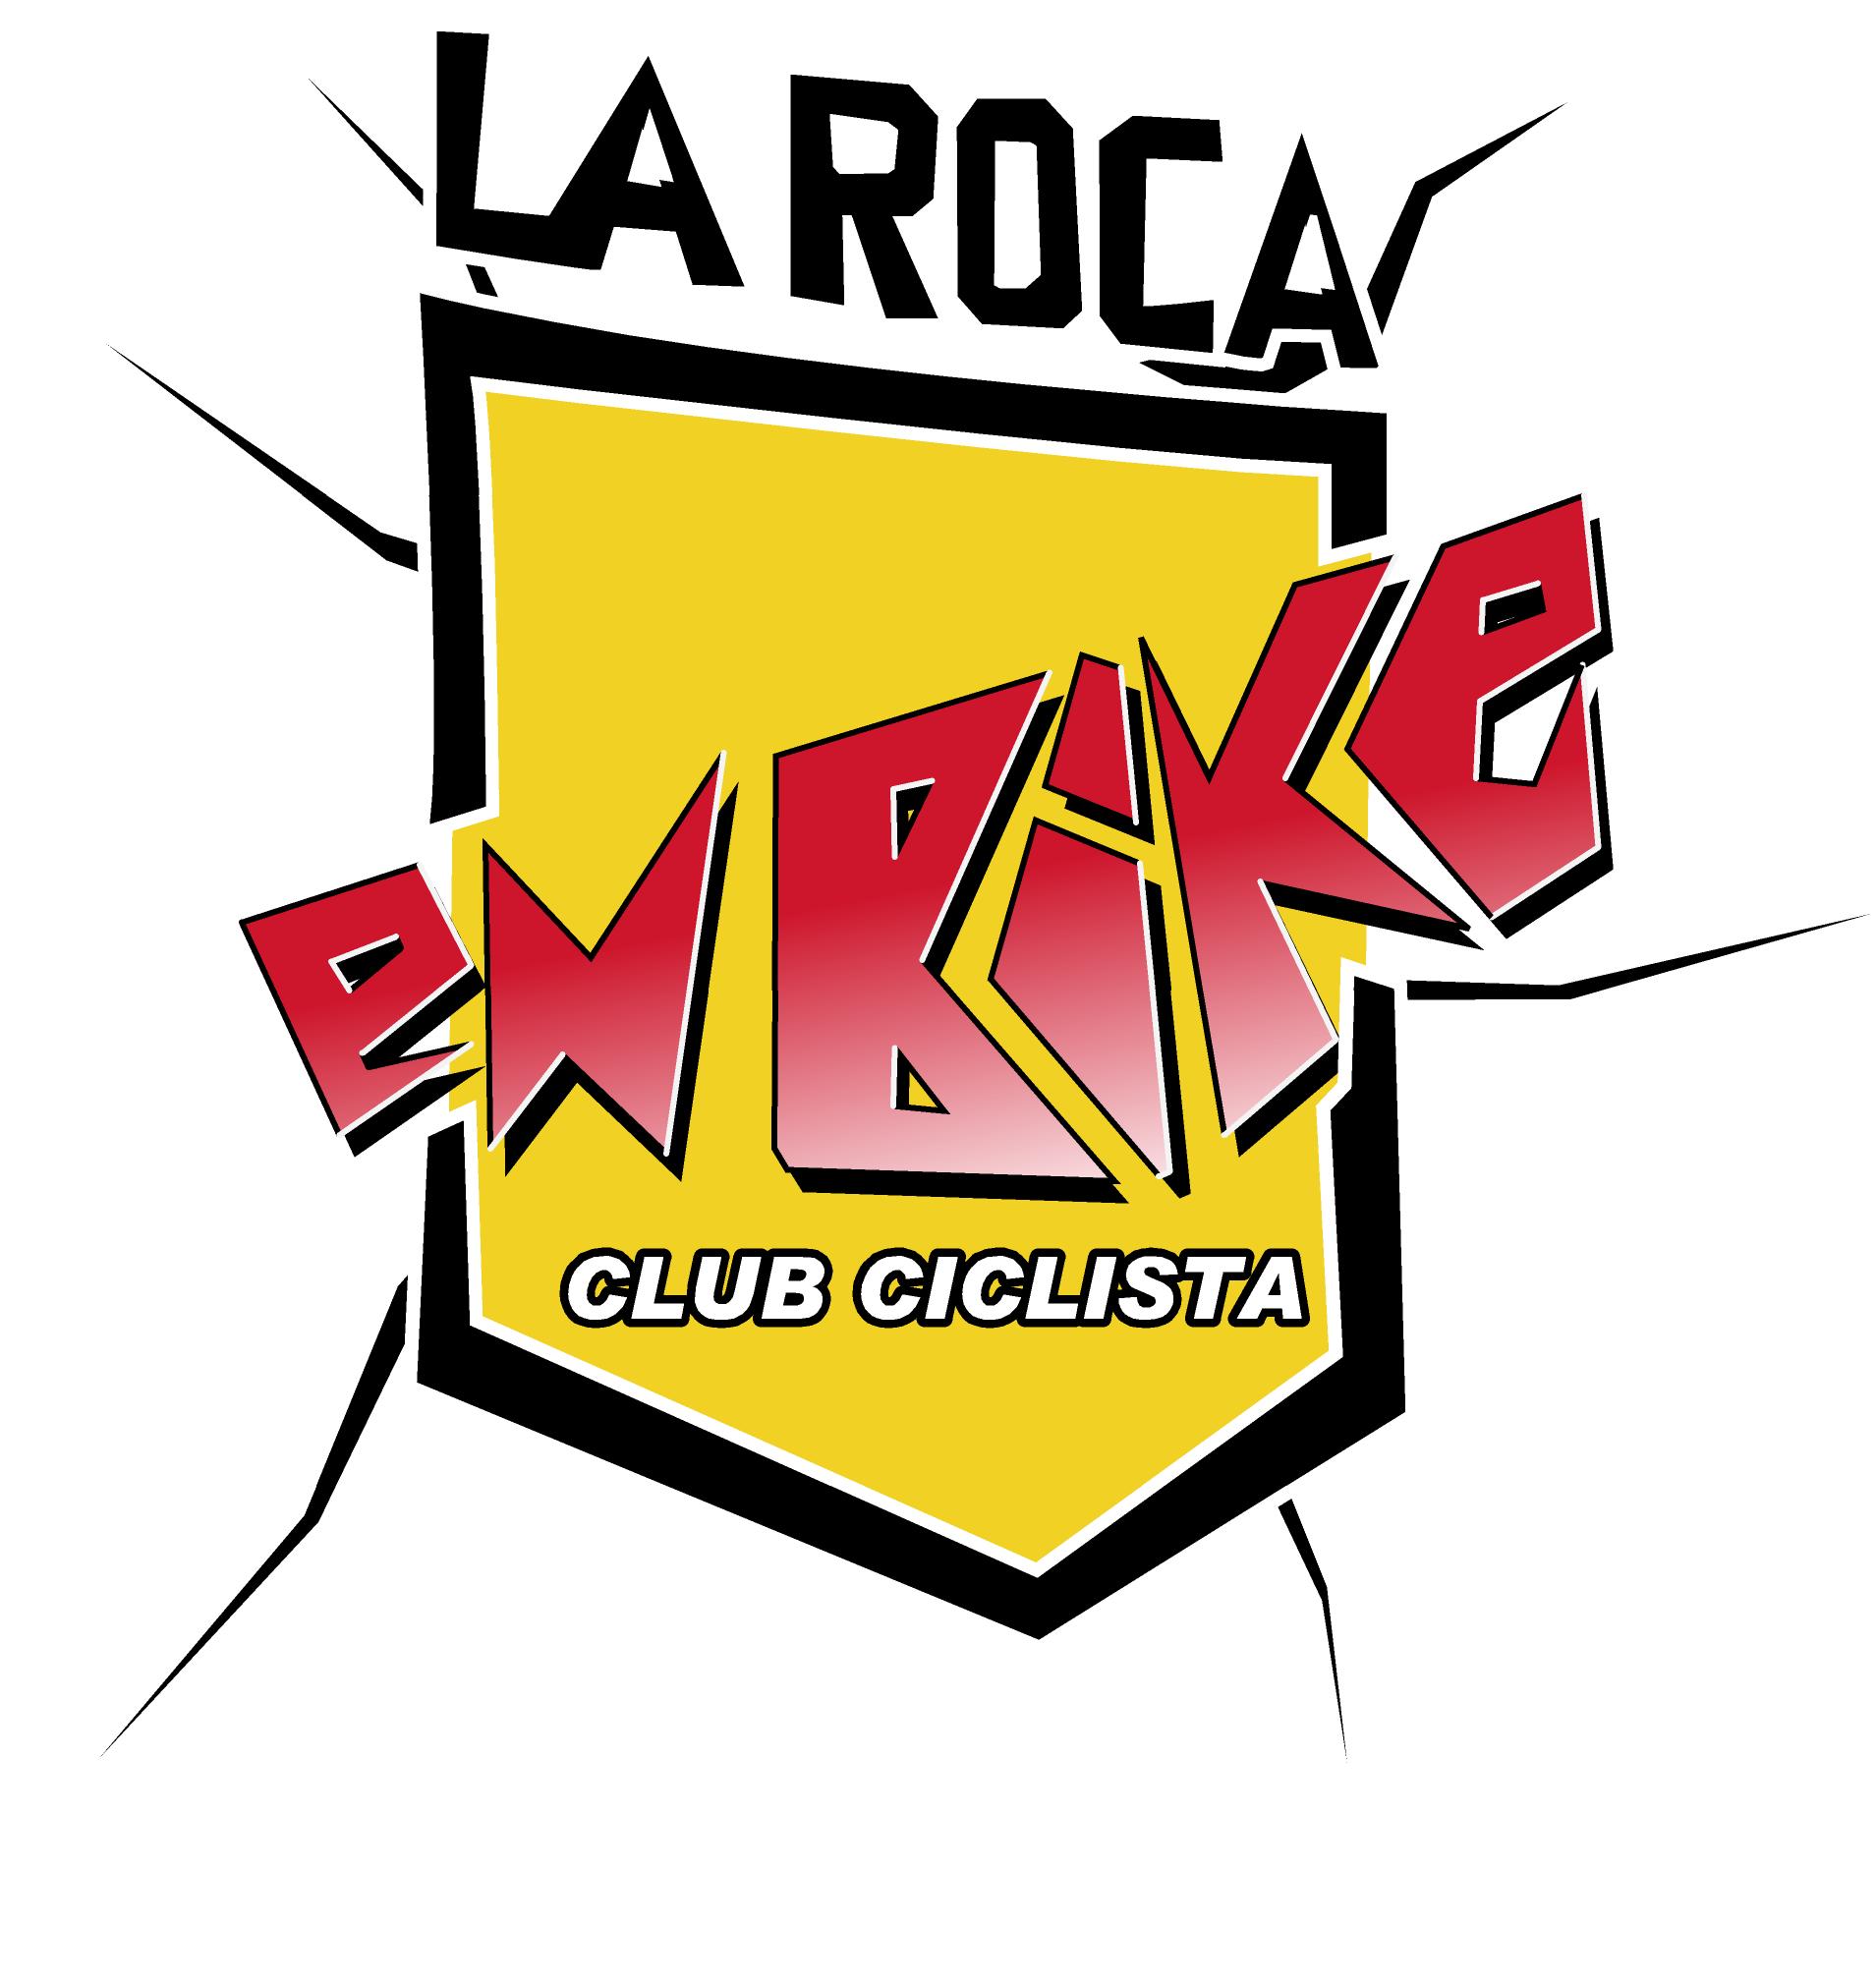 Club Ciclista la Roca en Bike